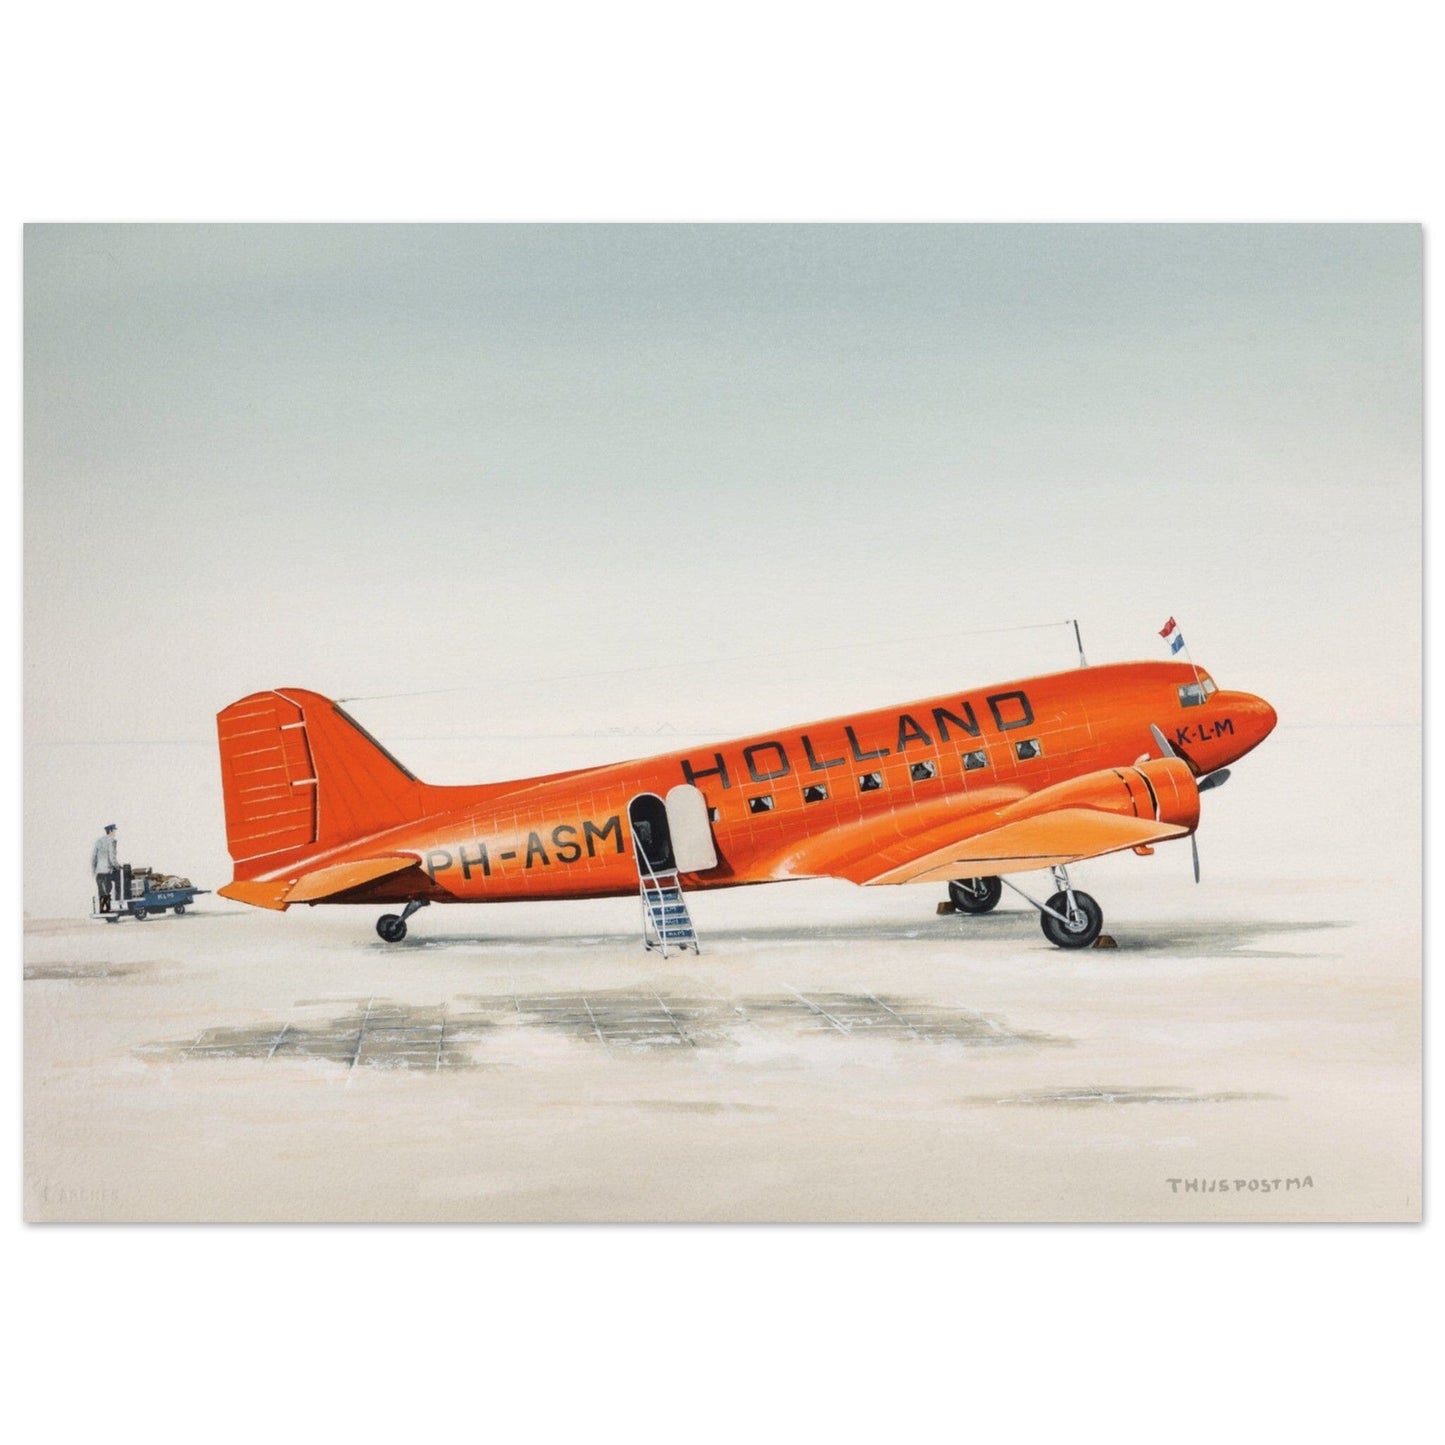 Thijs Postma - Poster - Douglas DC-3 KLM PH-ASM Orange Poster Only TP Aviation Art 50x70 cm / 20x28″ 